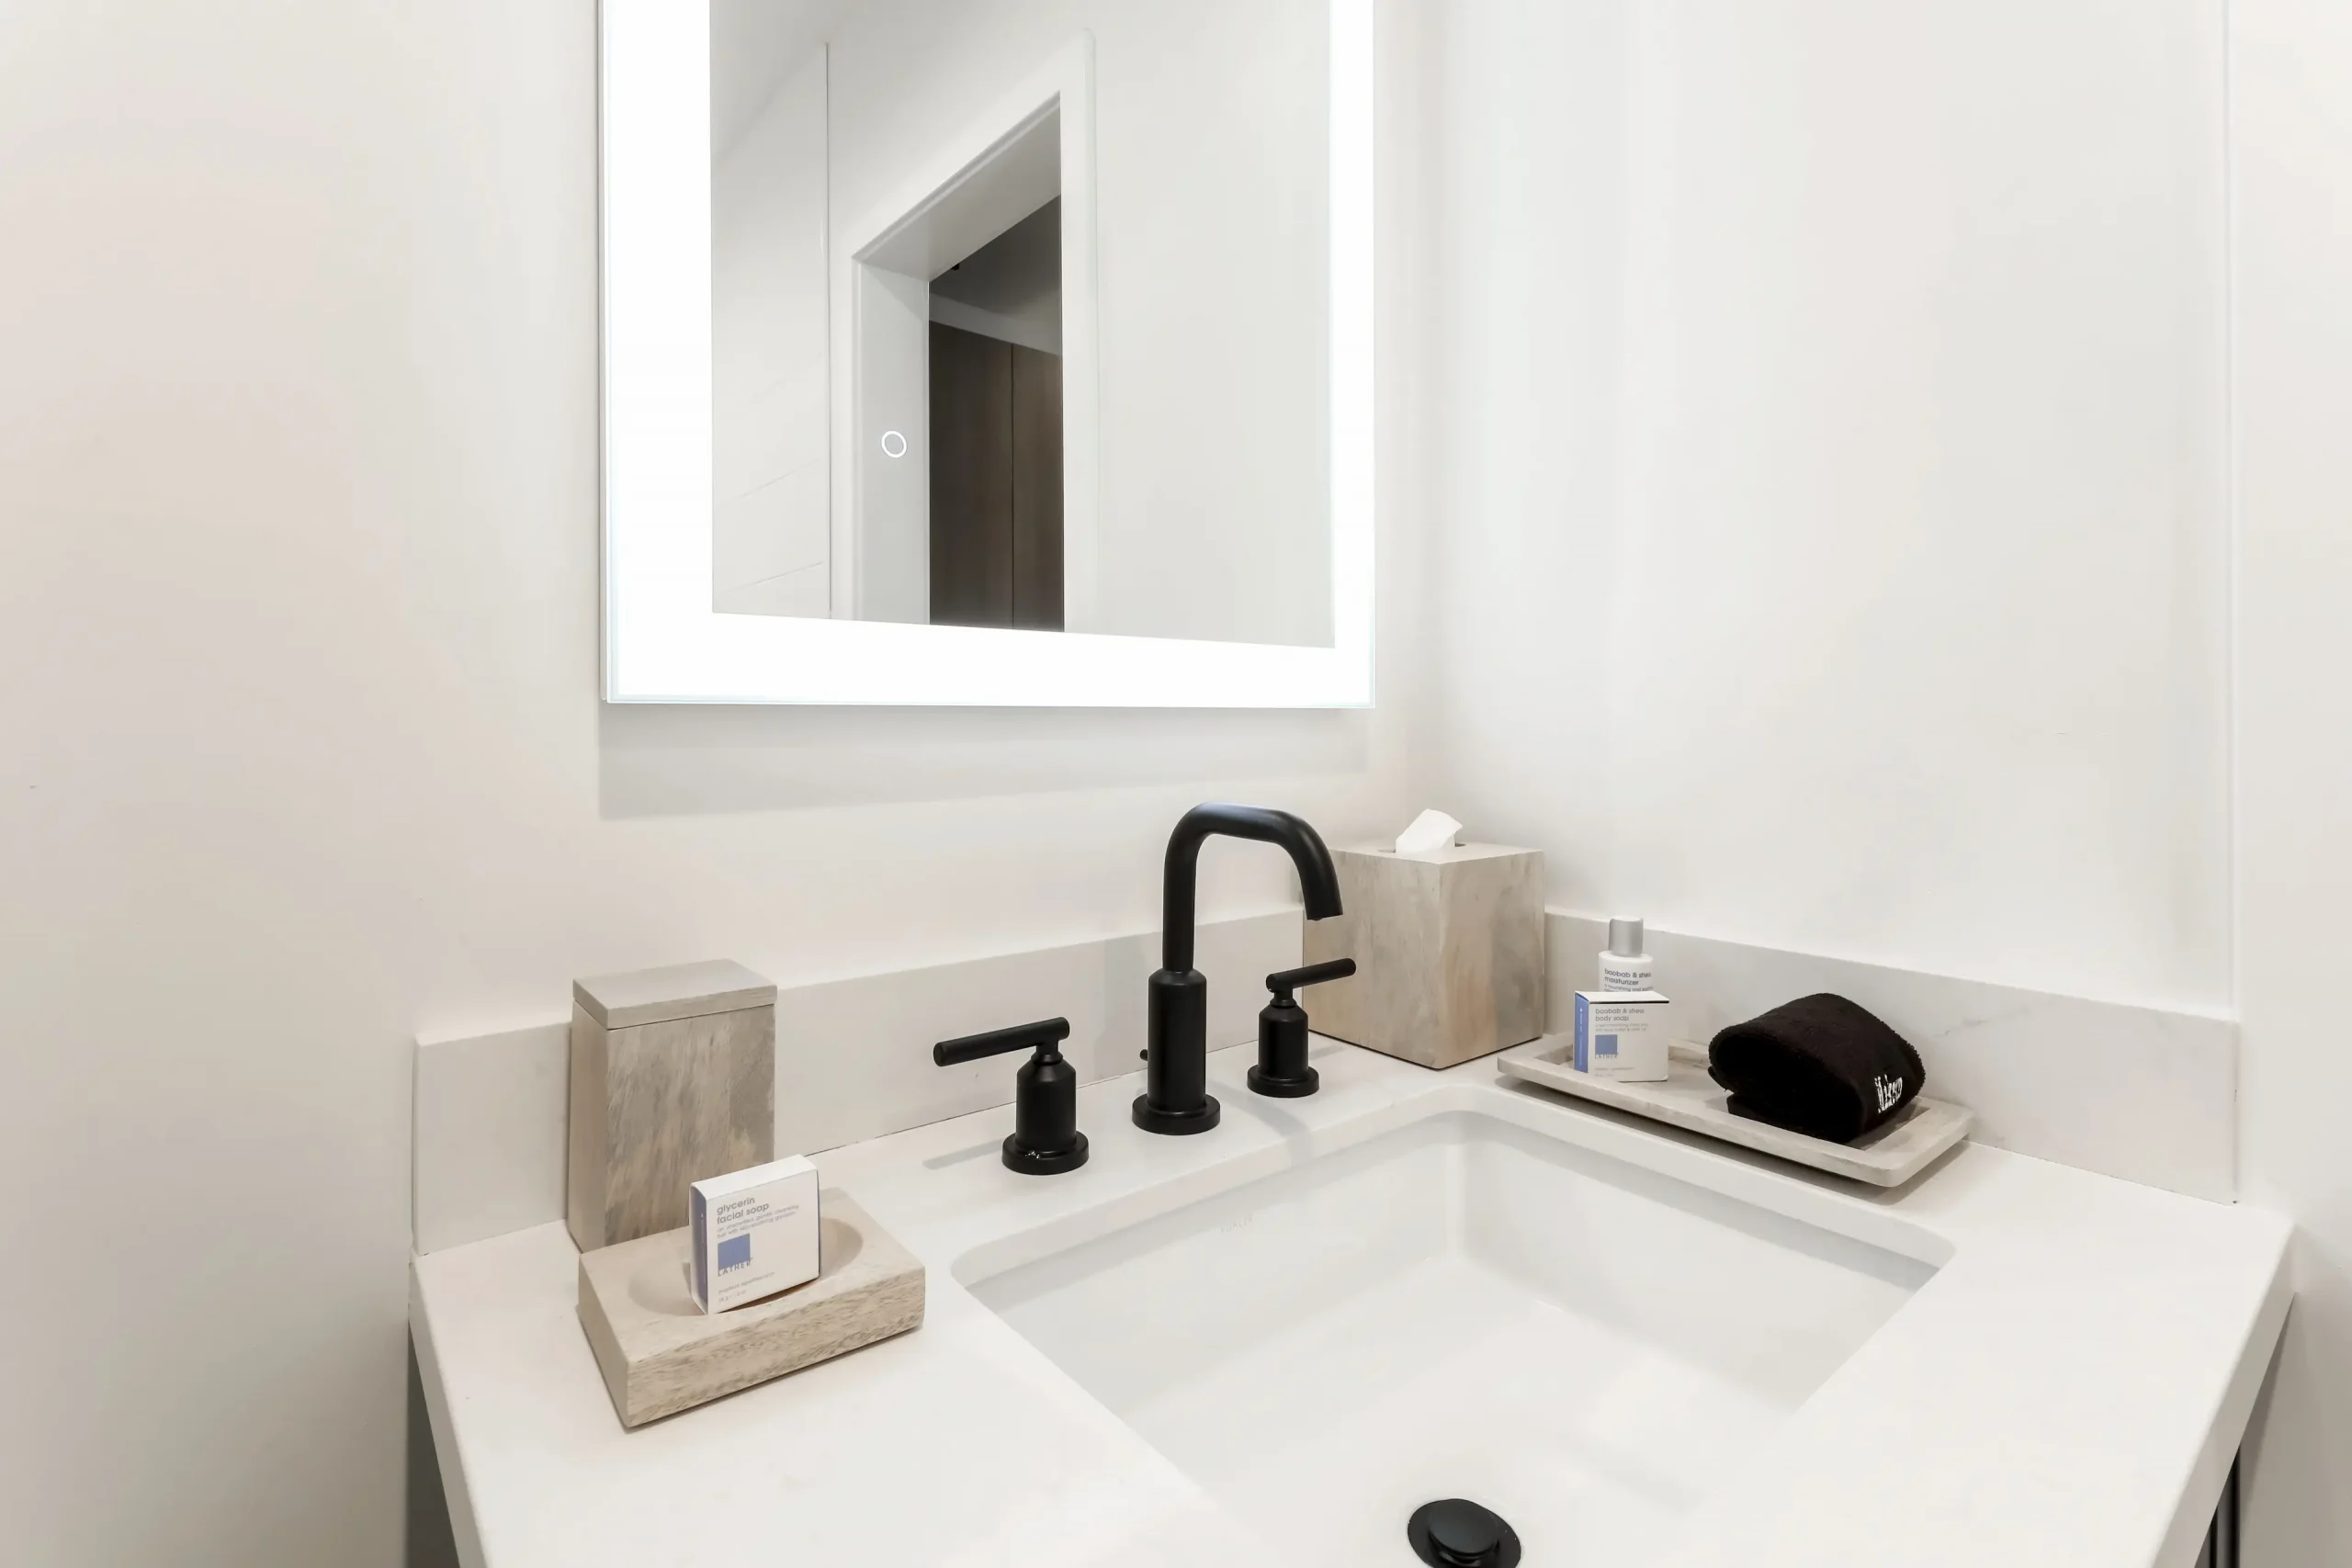 Del Mar guestroom sink and bath products